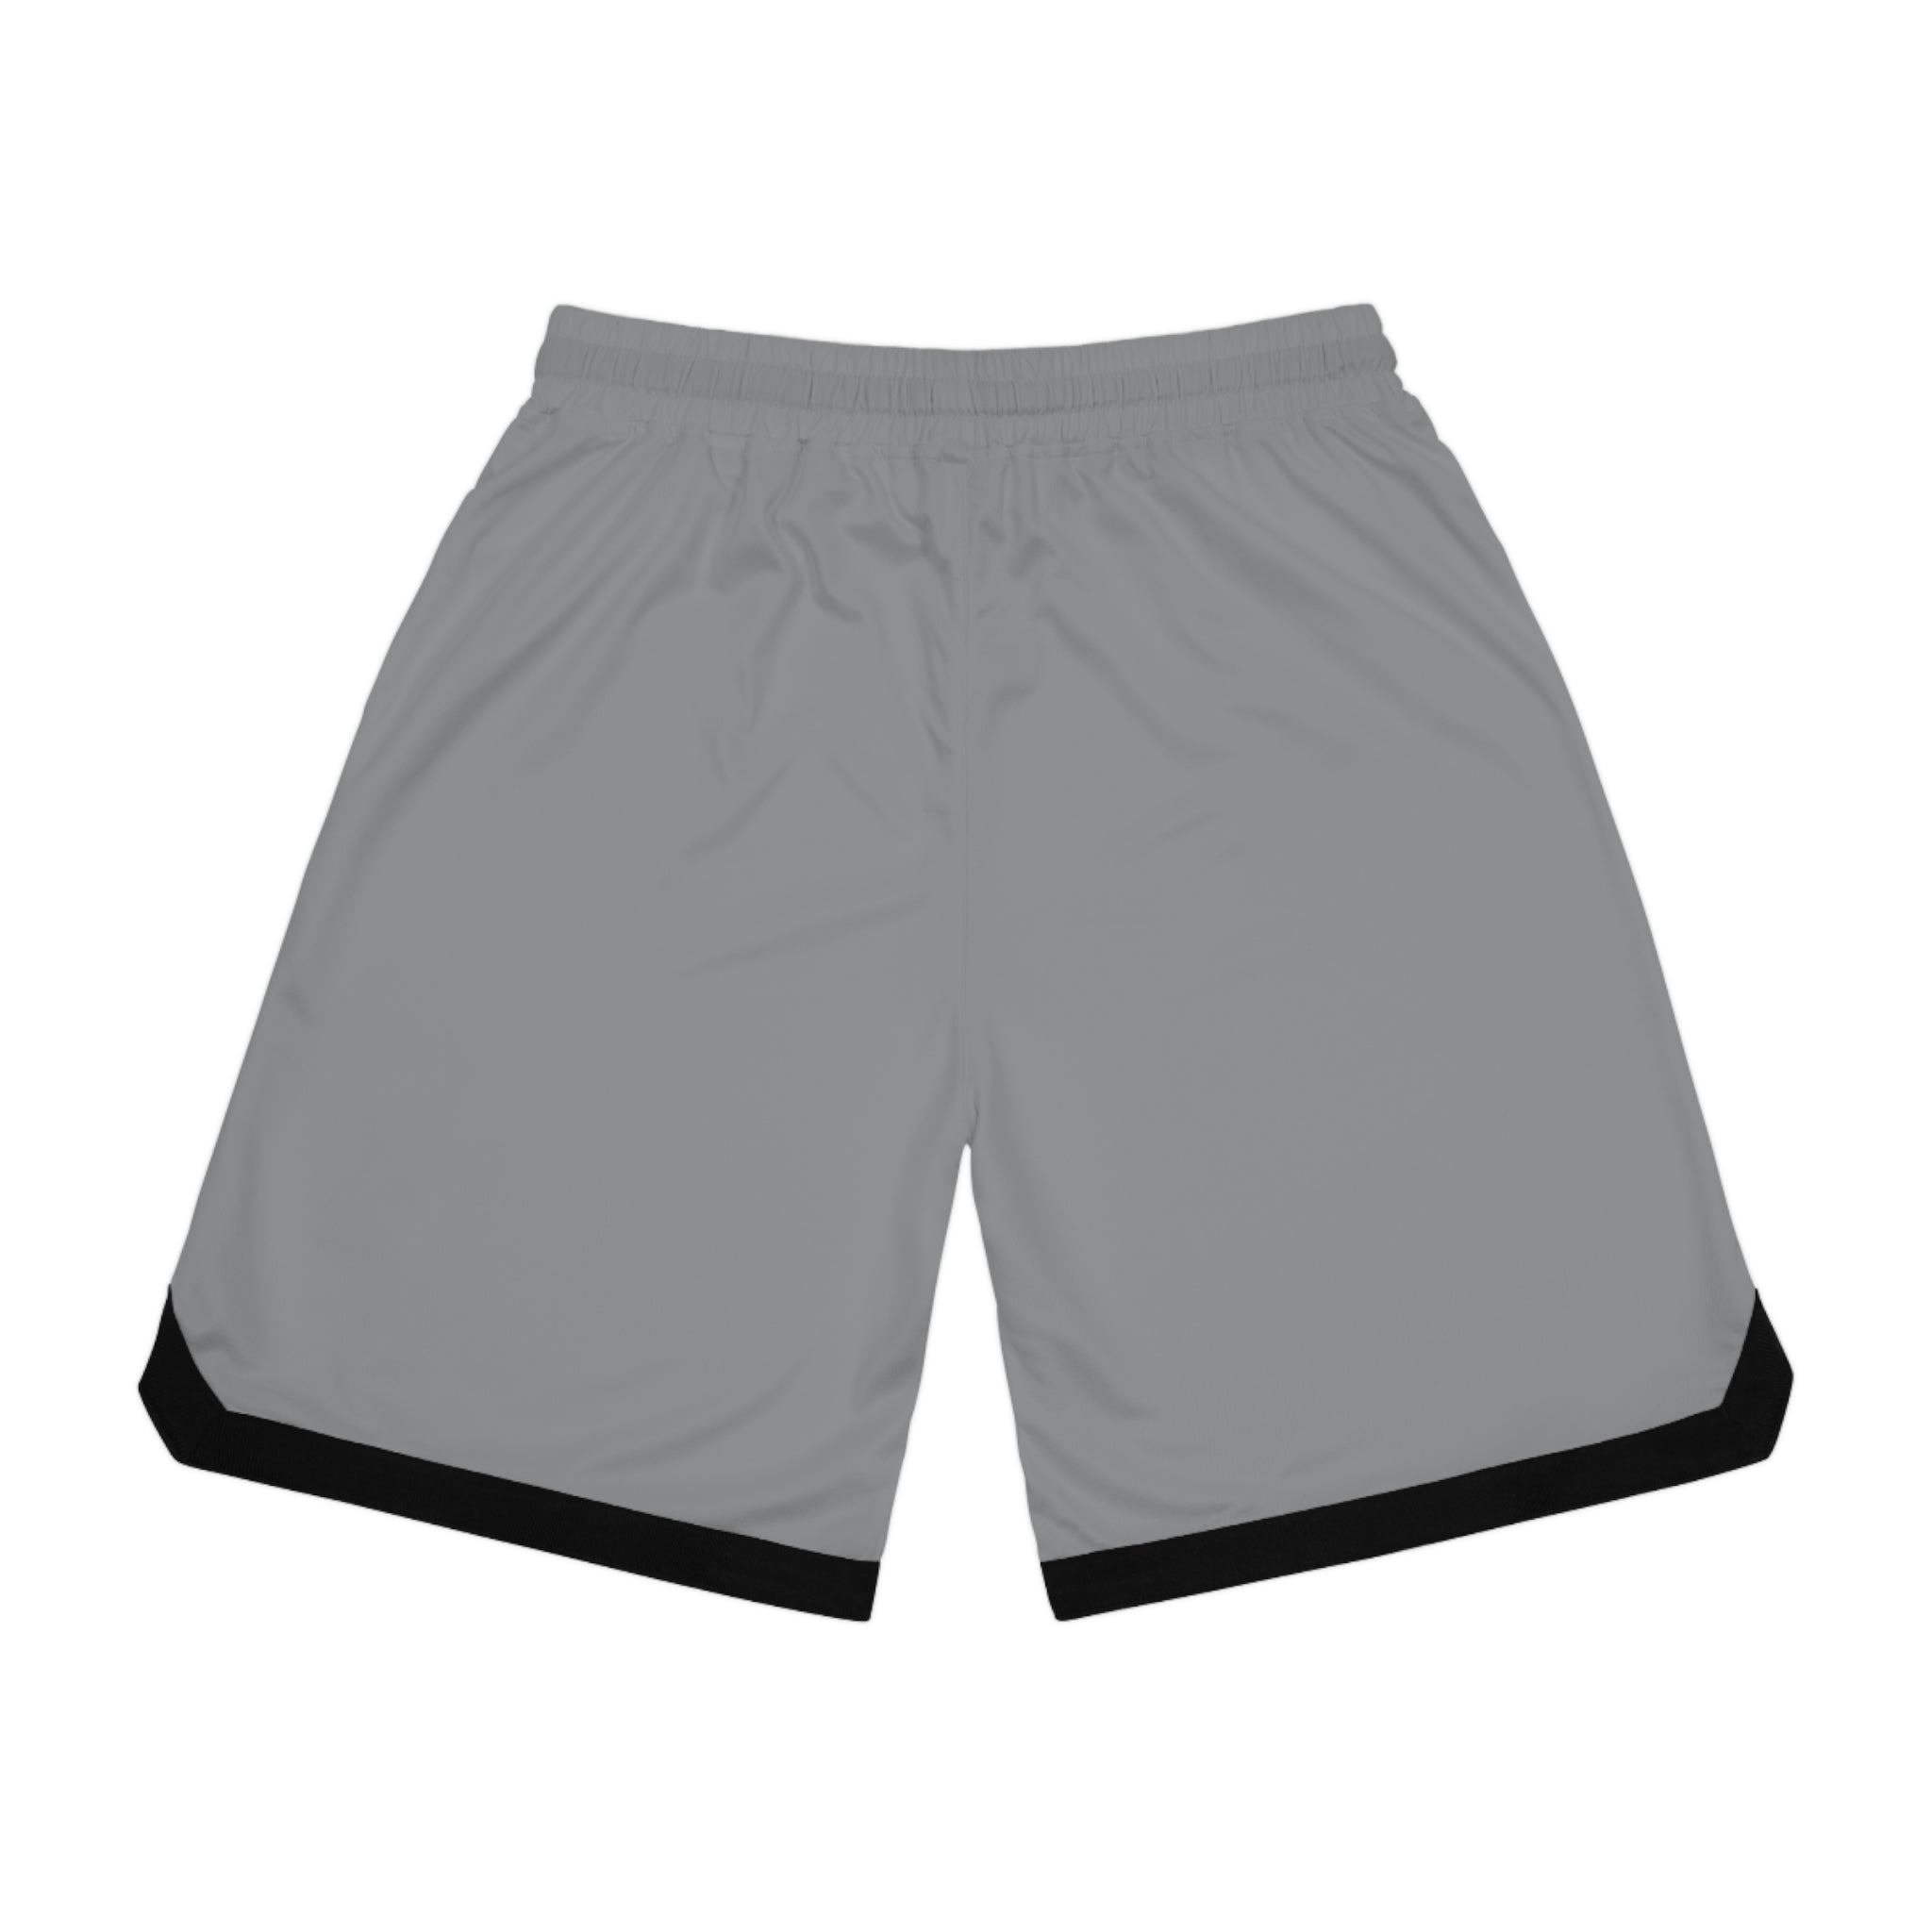 Combinedminds Basketball Shorts Grey/Black Logo